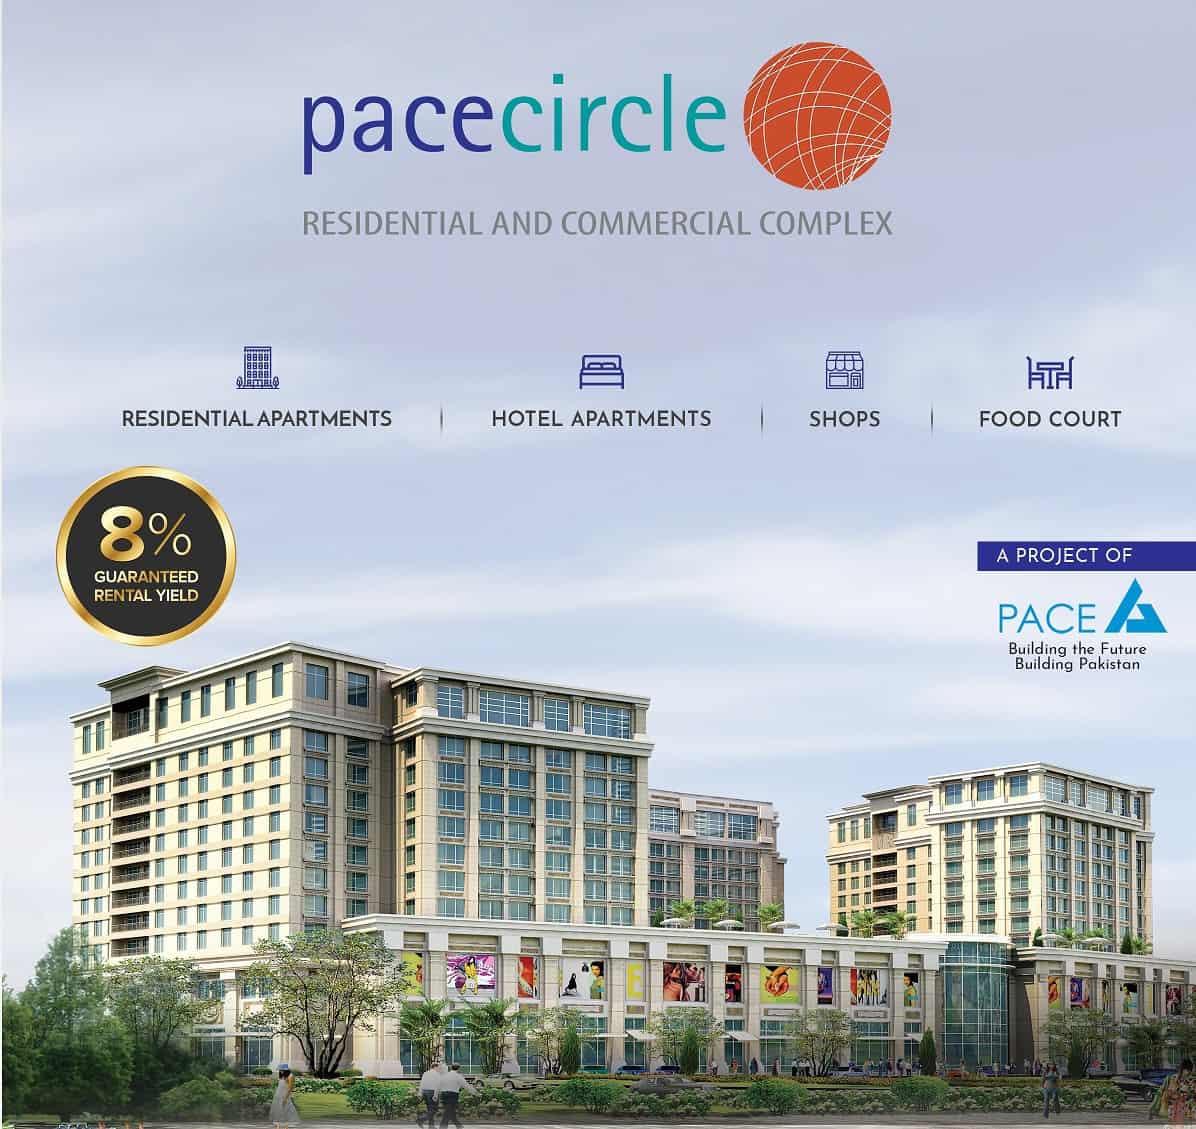 Pace Circle